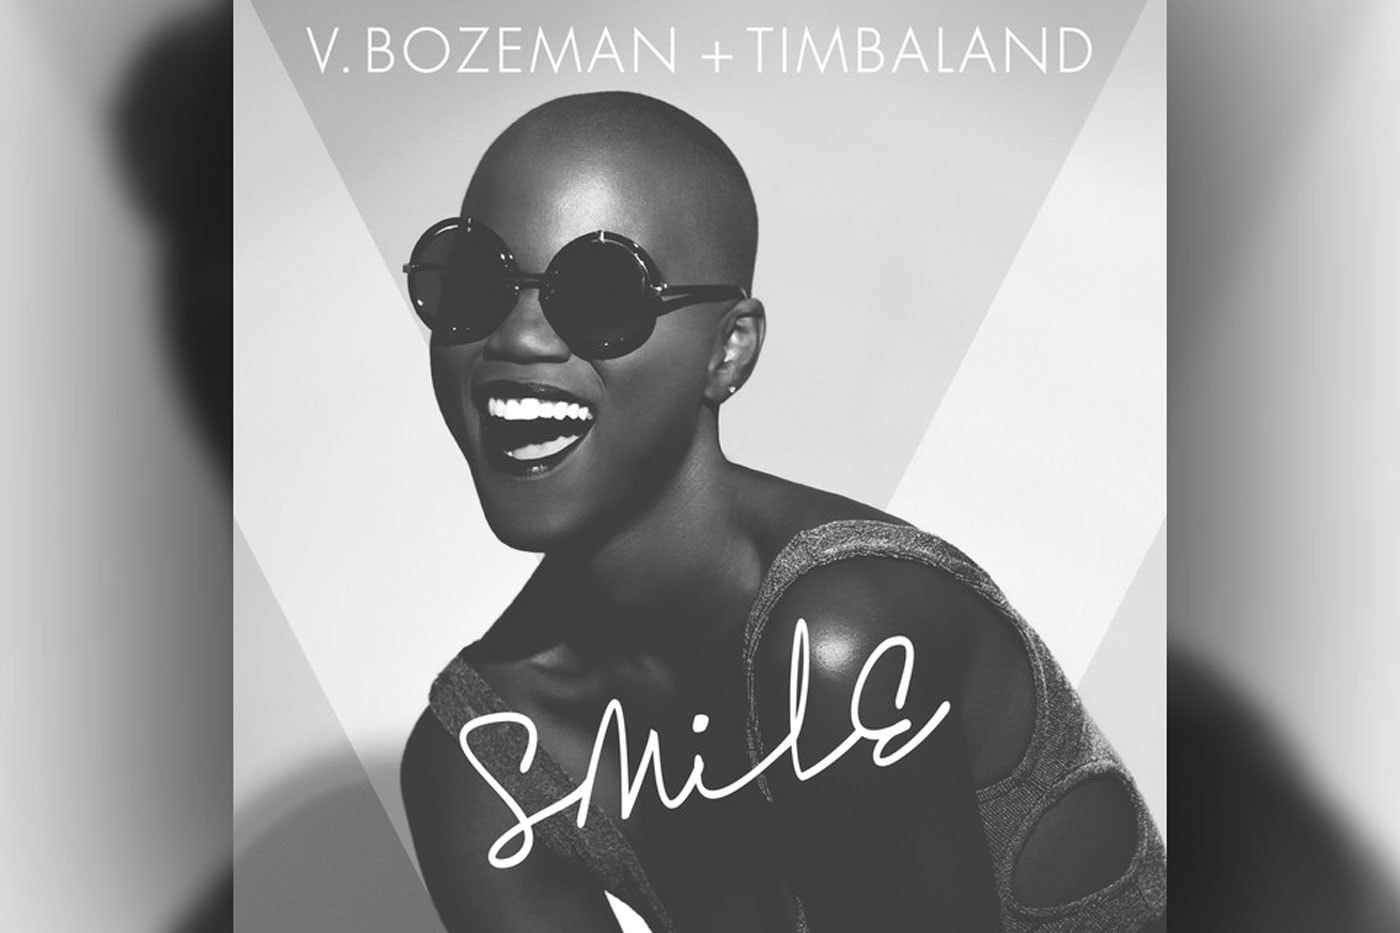 Timbaland featuring V. Bozeman - Smile